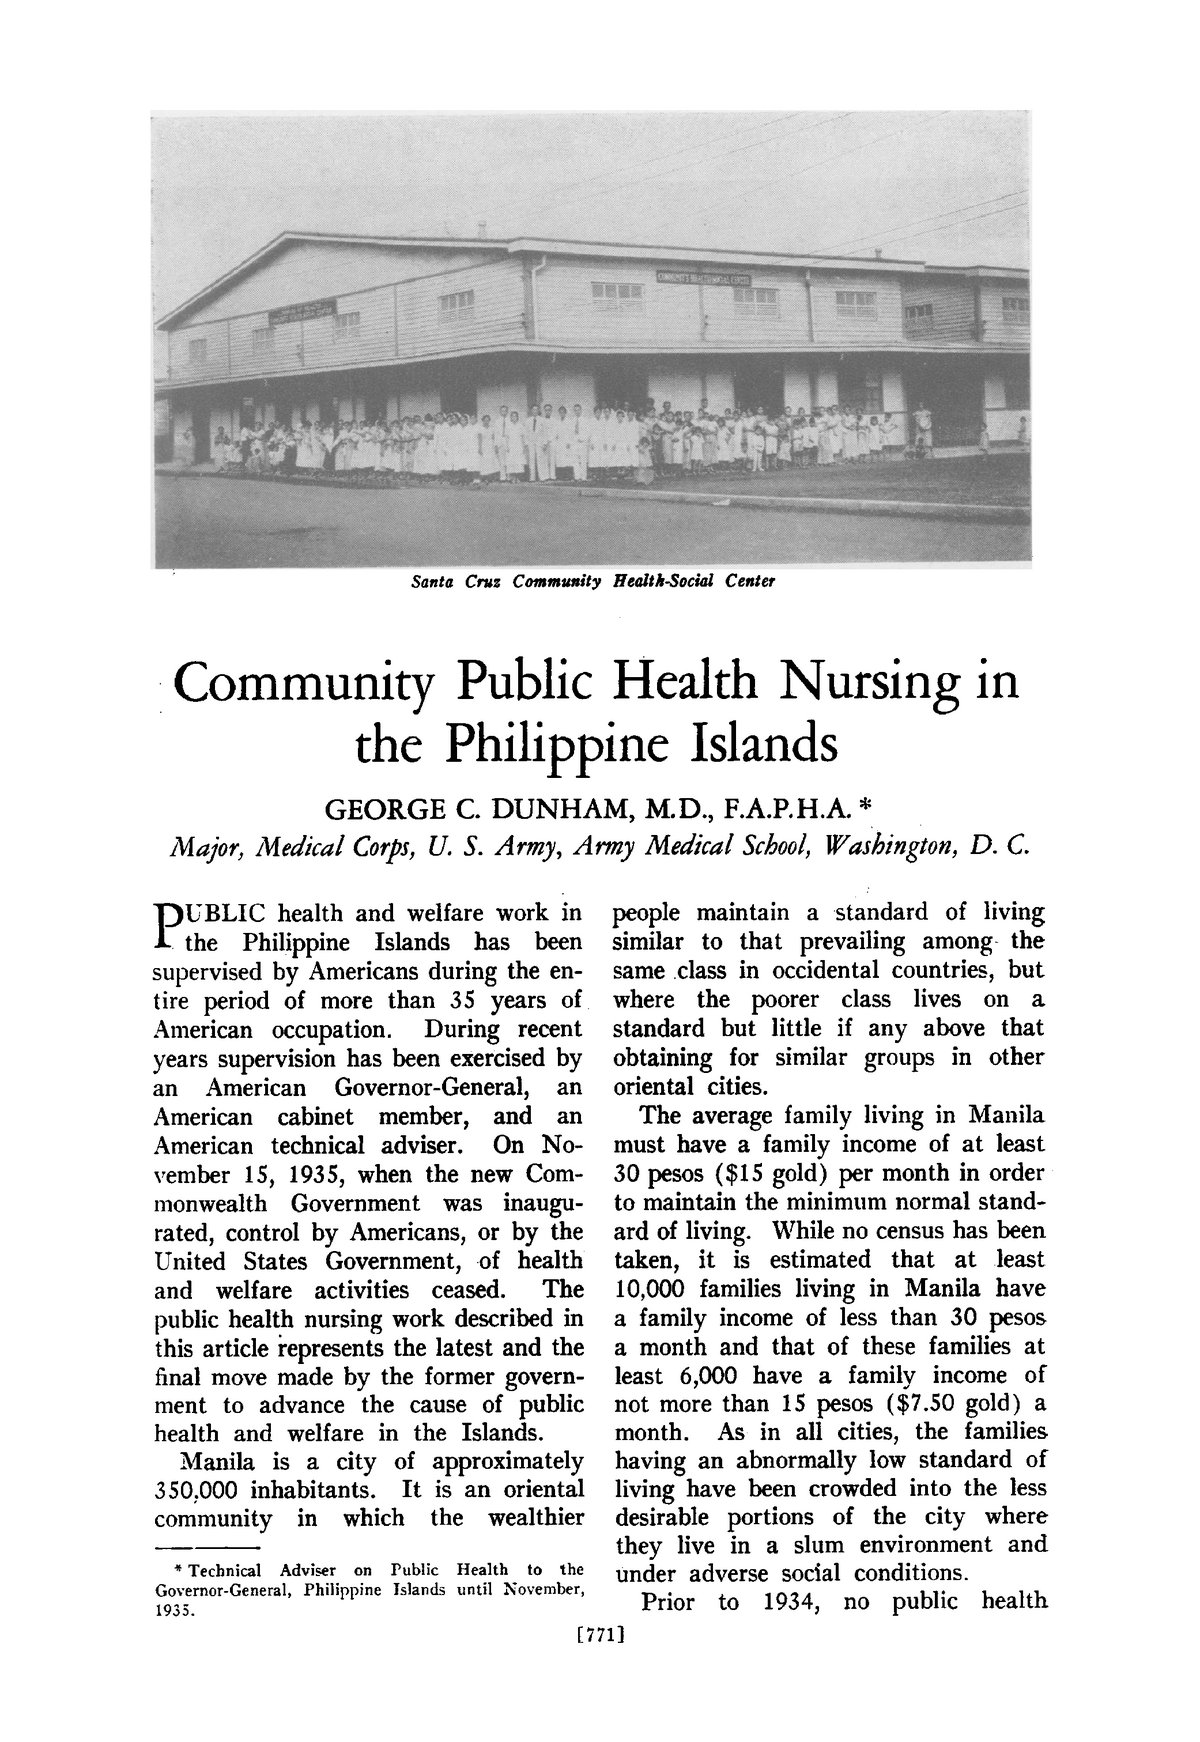 history of public health essay